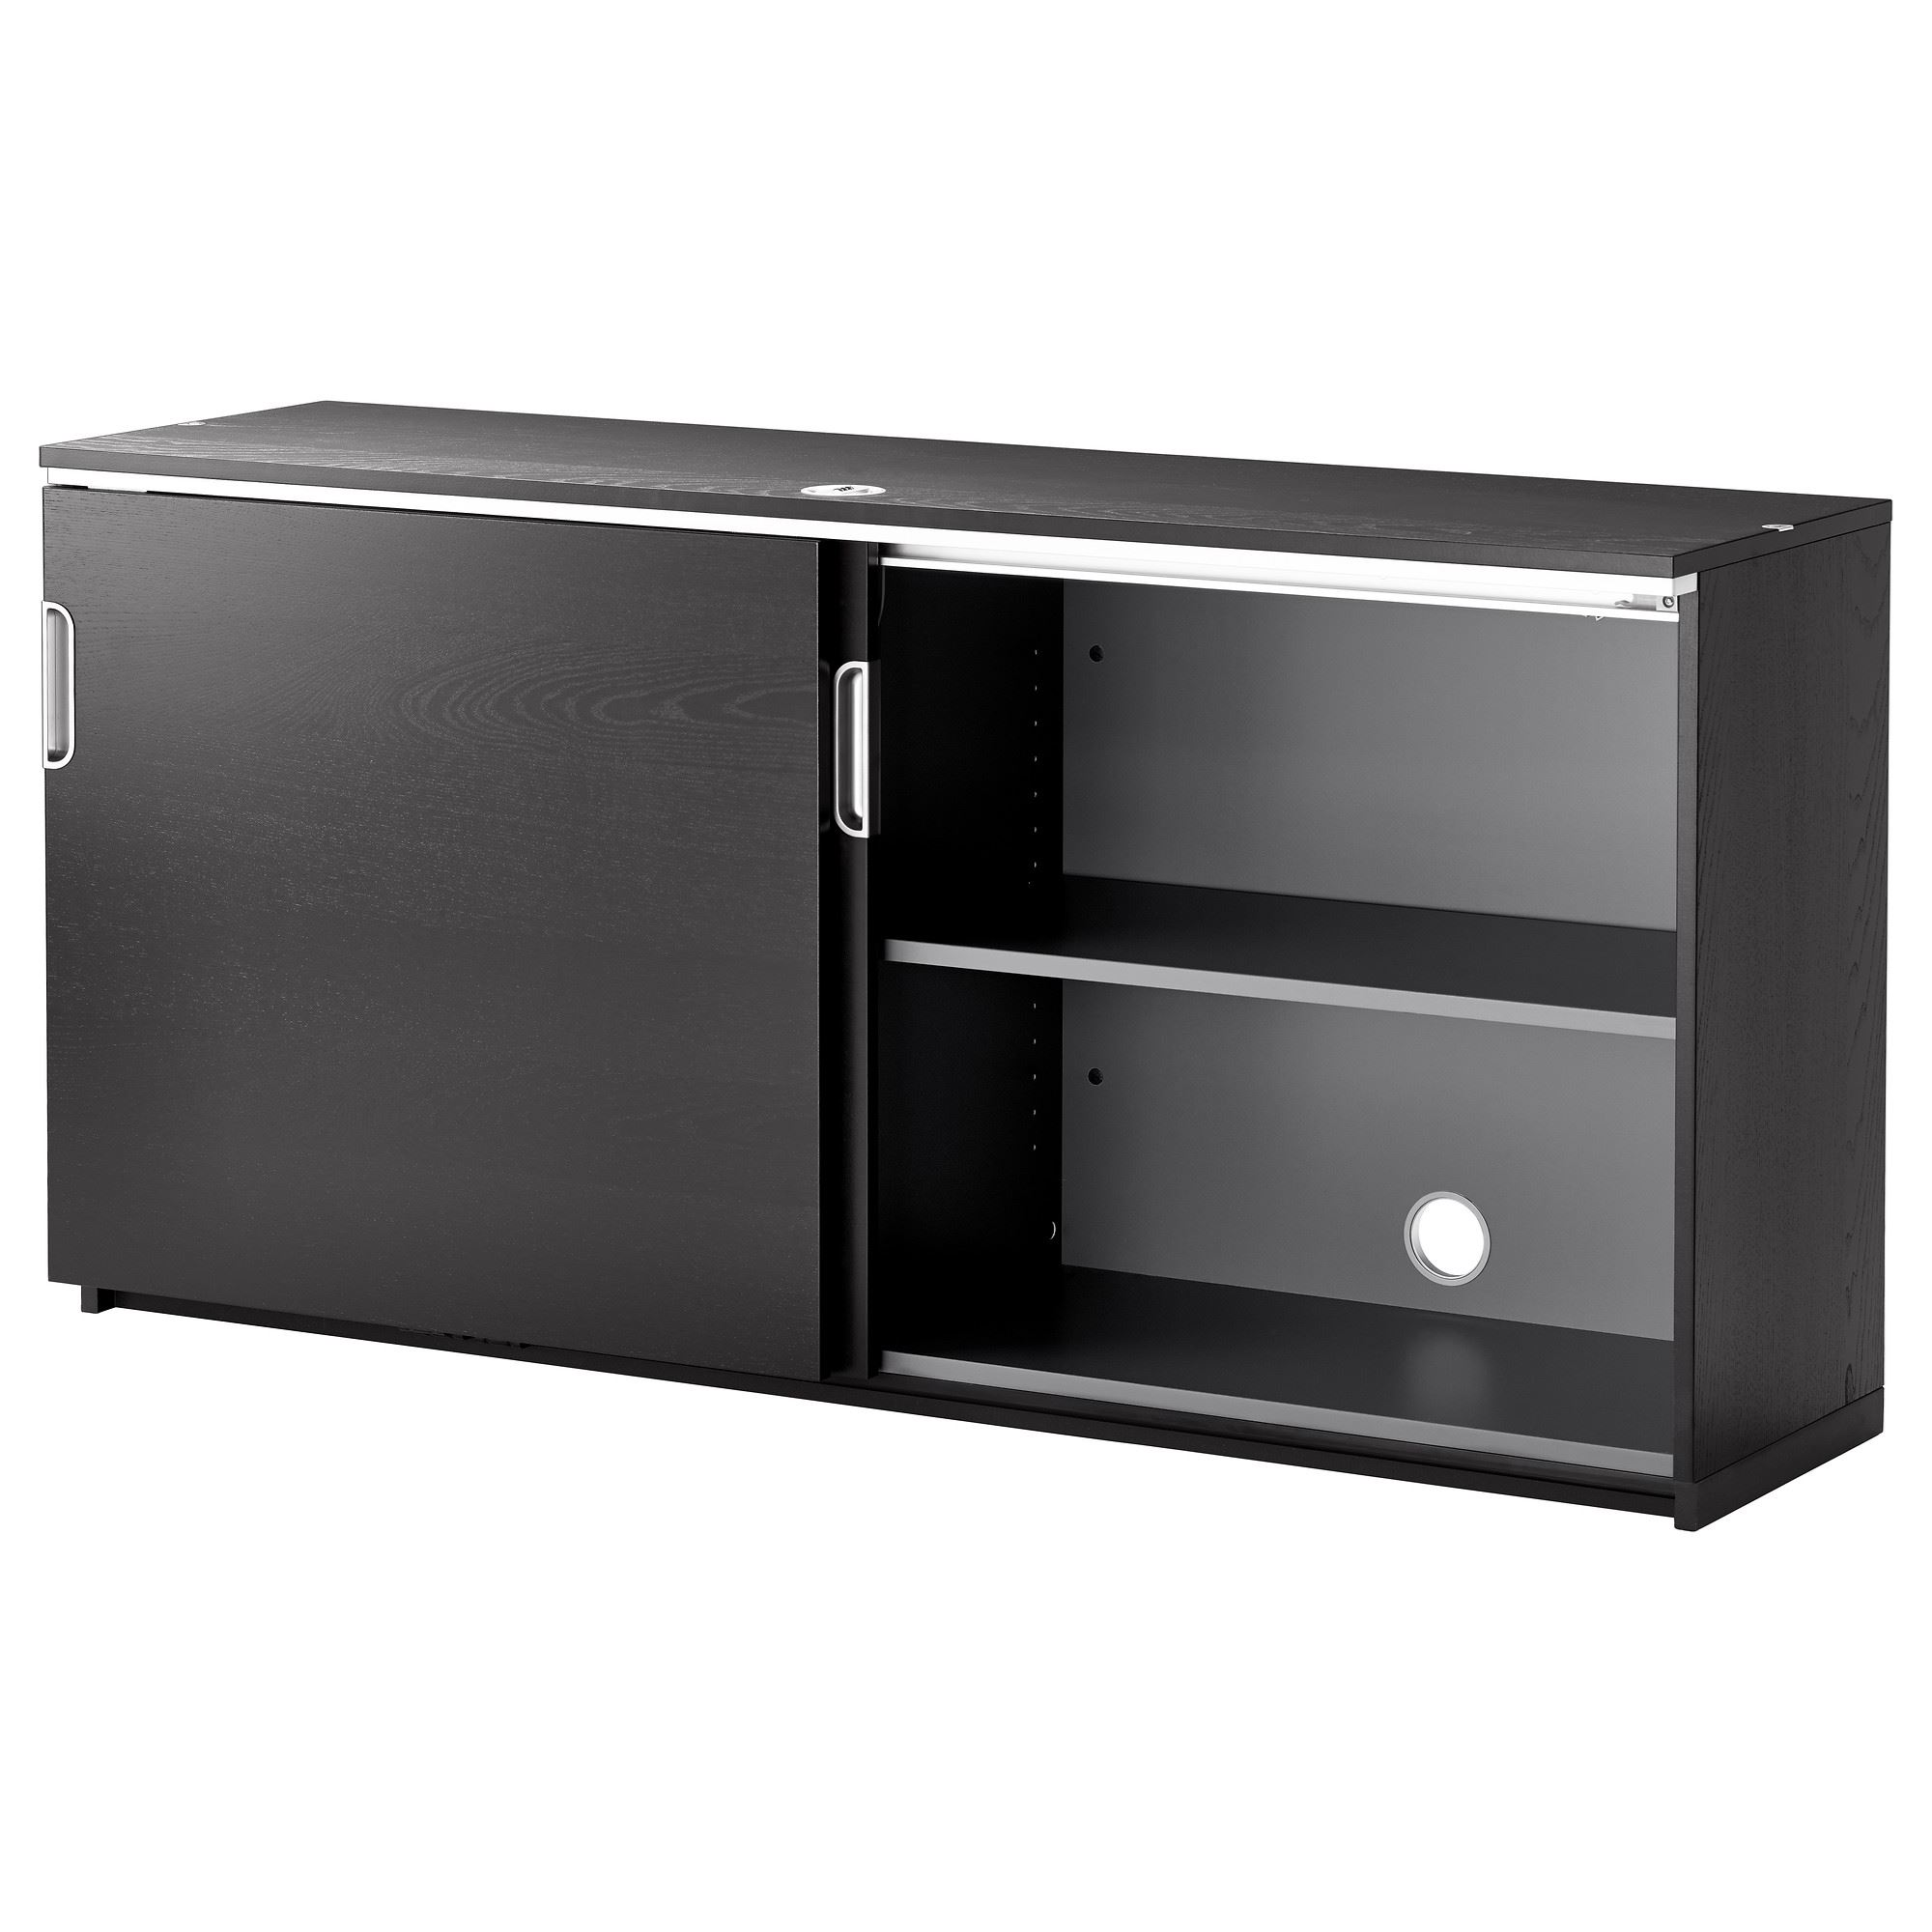 GALANT office cabinet black-brown/sliding door 160x80 cm | IKEA Home Office